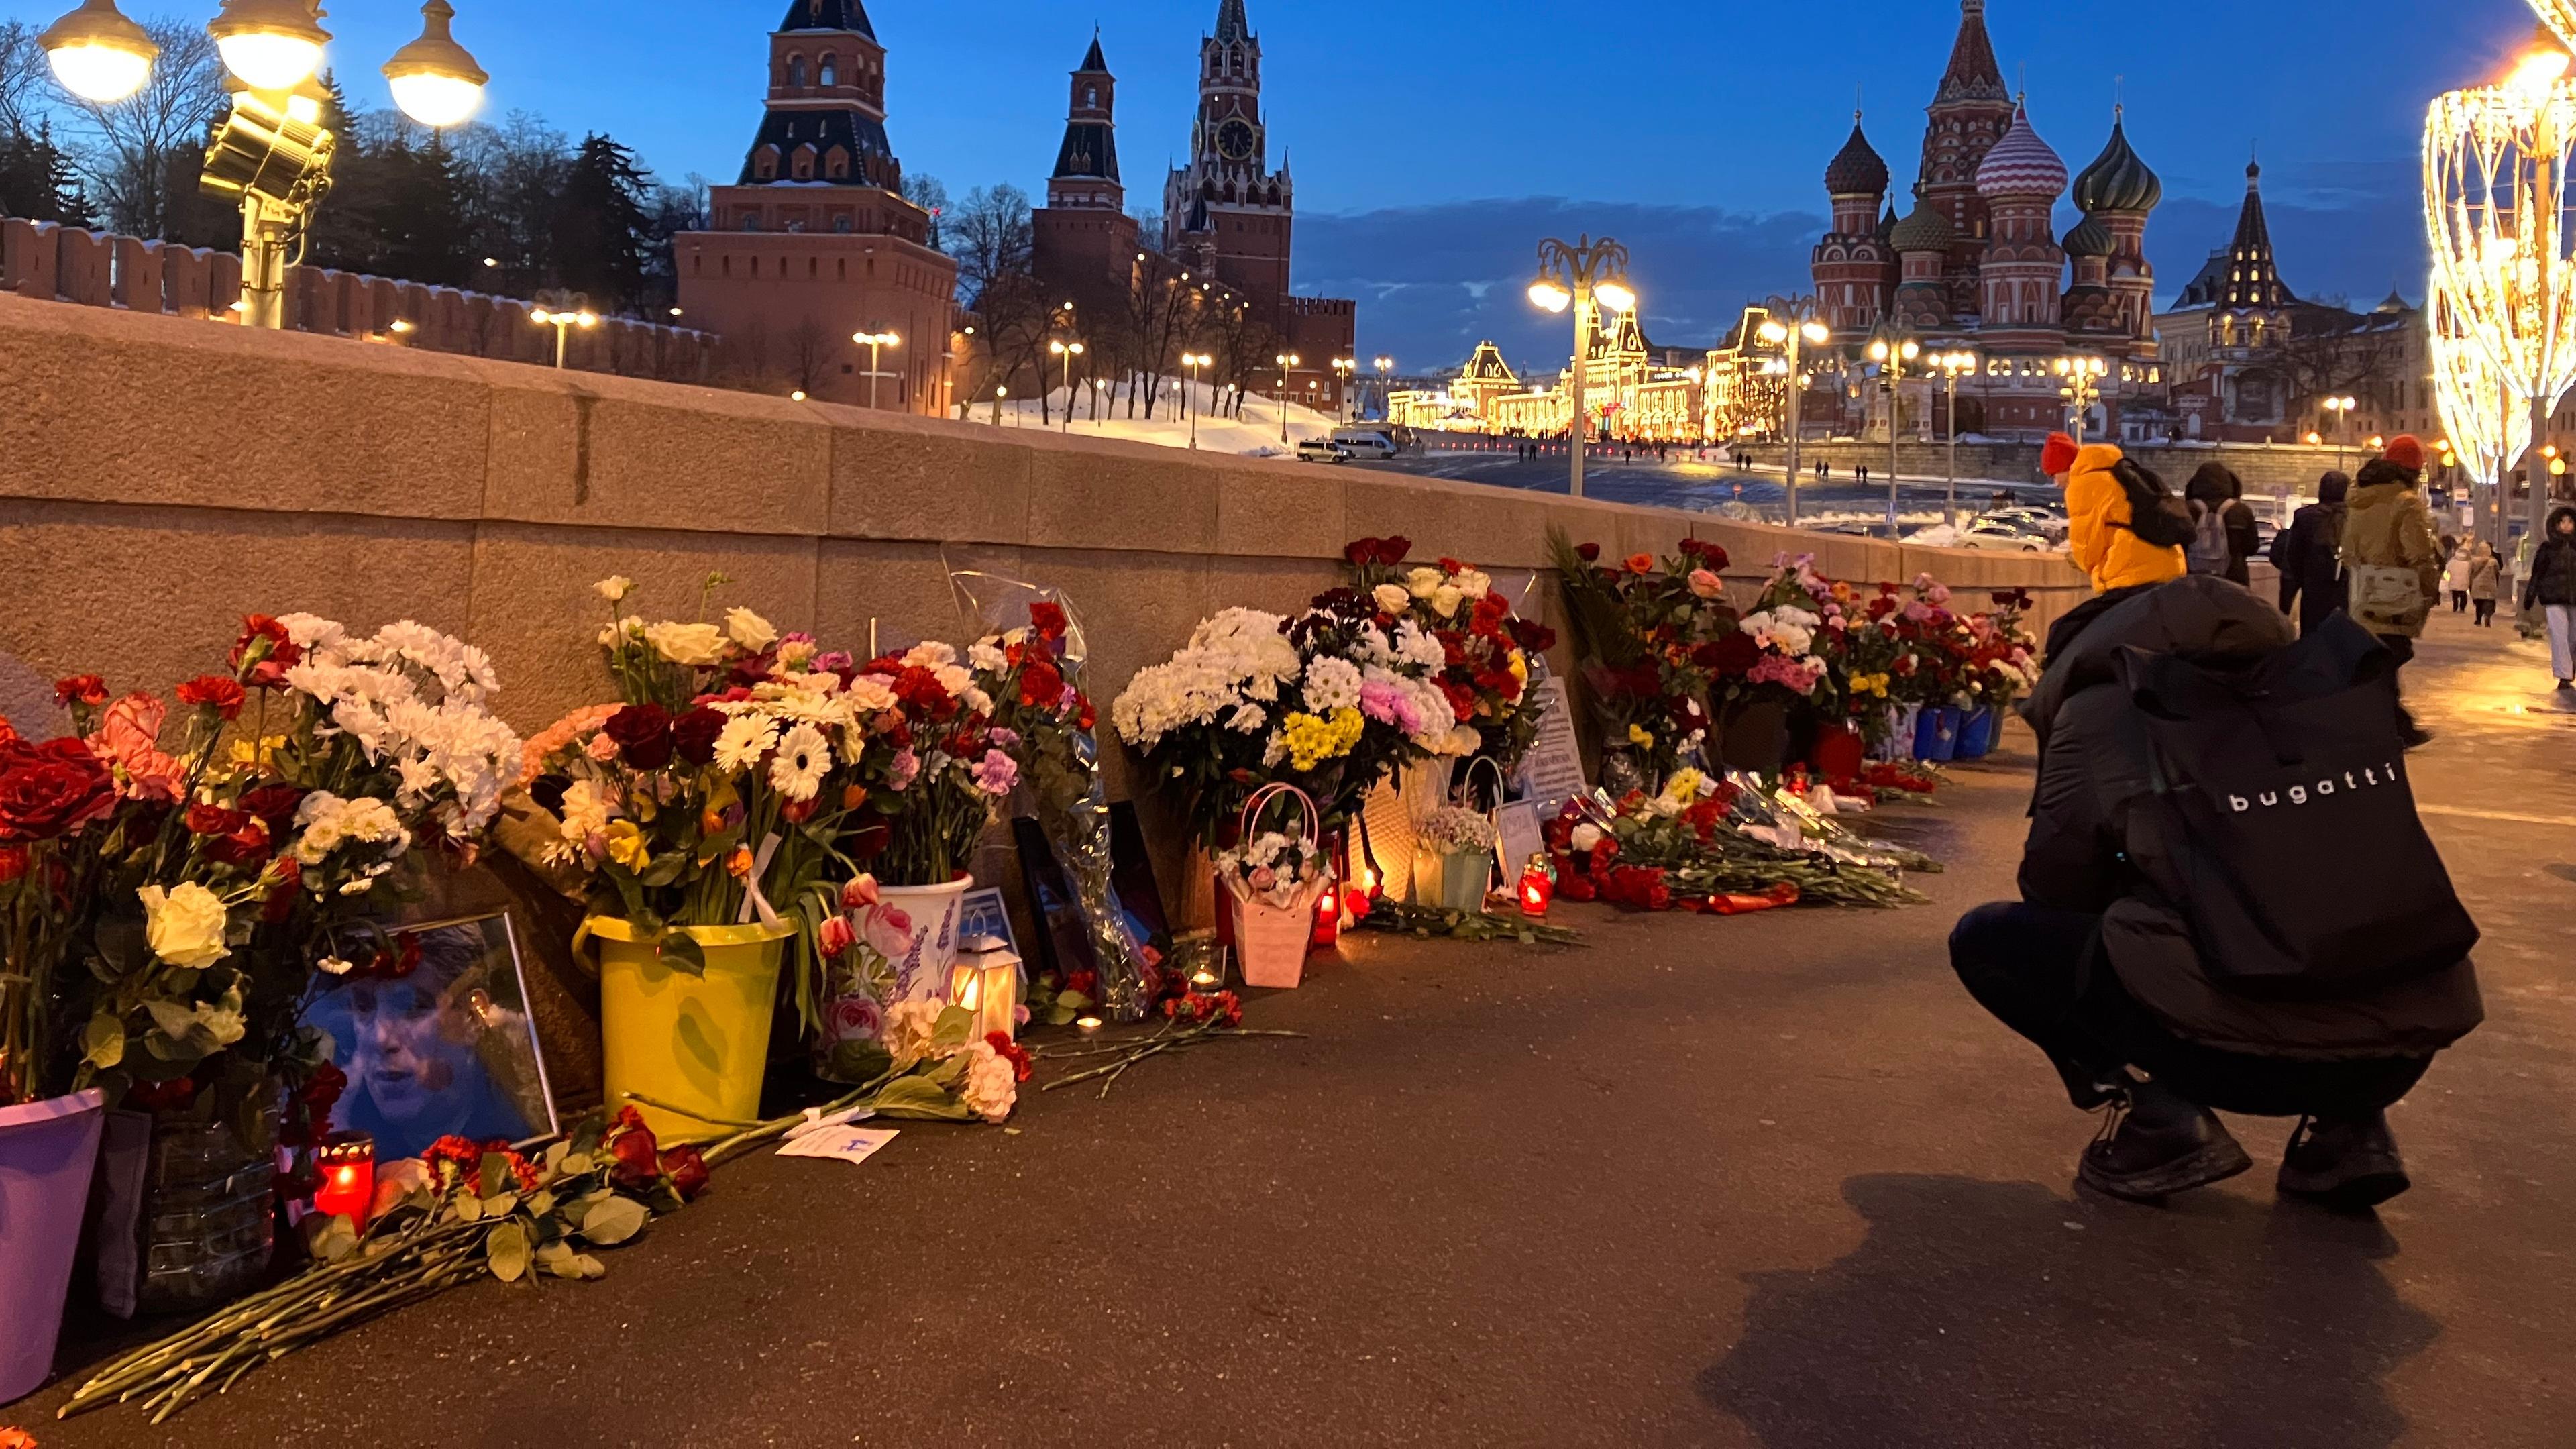 Menschen legen Blumen an der Stelle nieder, an der Boris Nemzow 2015 erschossen wurde.